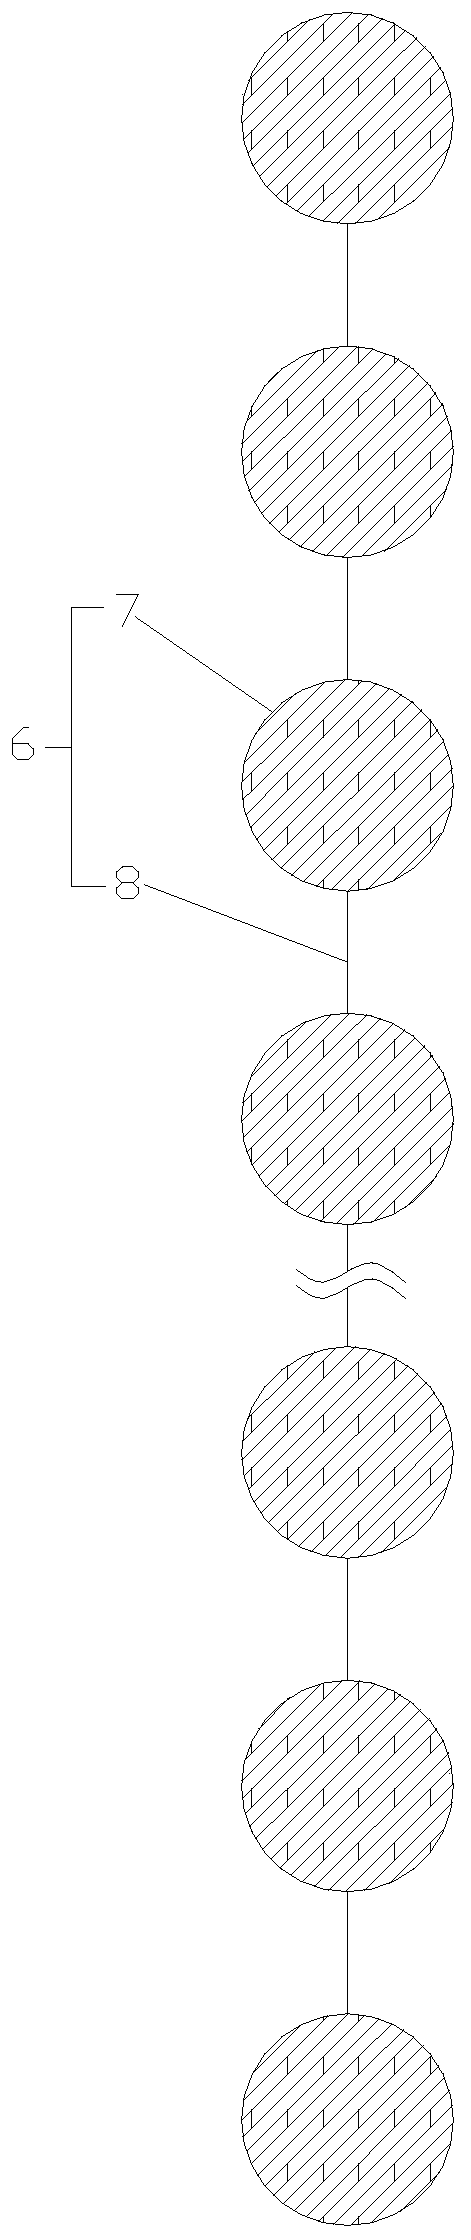 Rapid hemostasis device with balloon